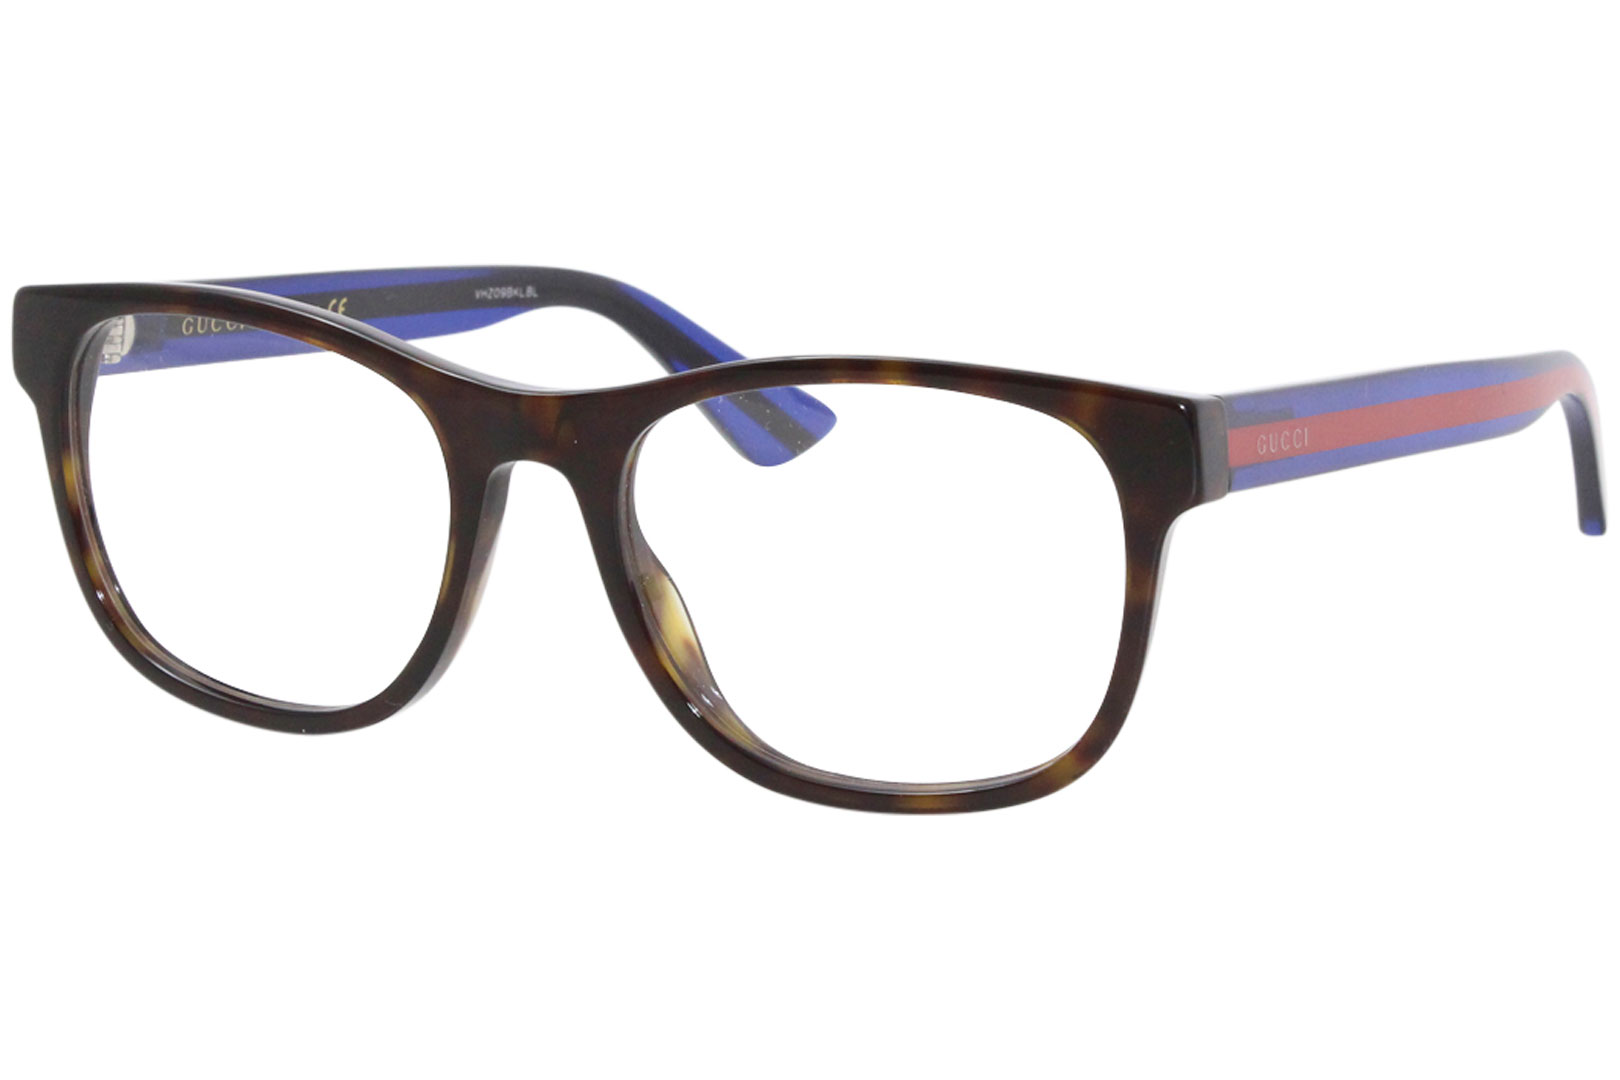 Accusation End Compliment Gucci Eyeglasses GG0004O 003 Havana/Blue Full Rim Optical Frame 53mm |  EyeSpecs.com